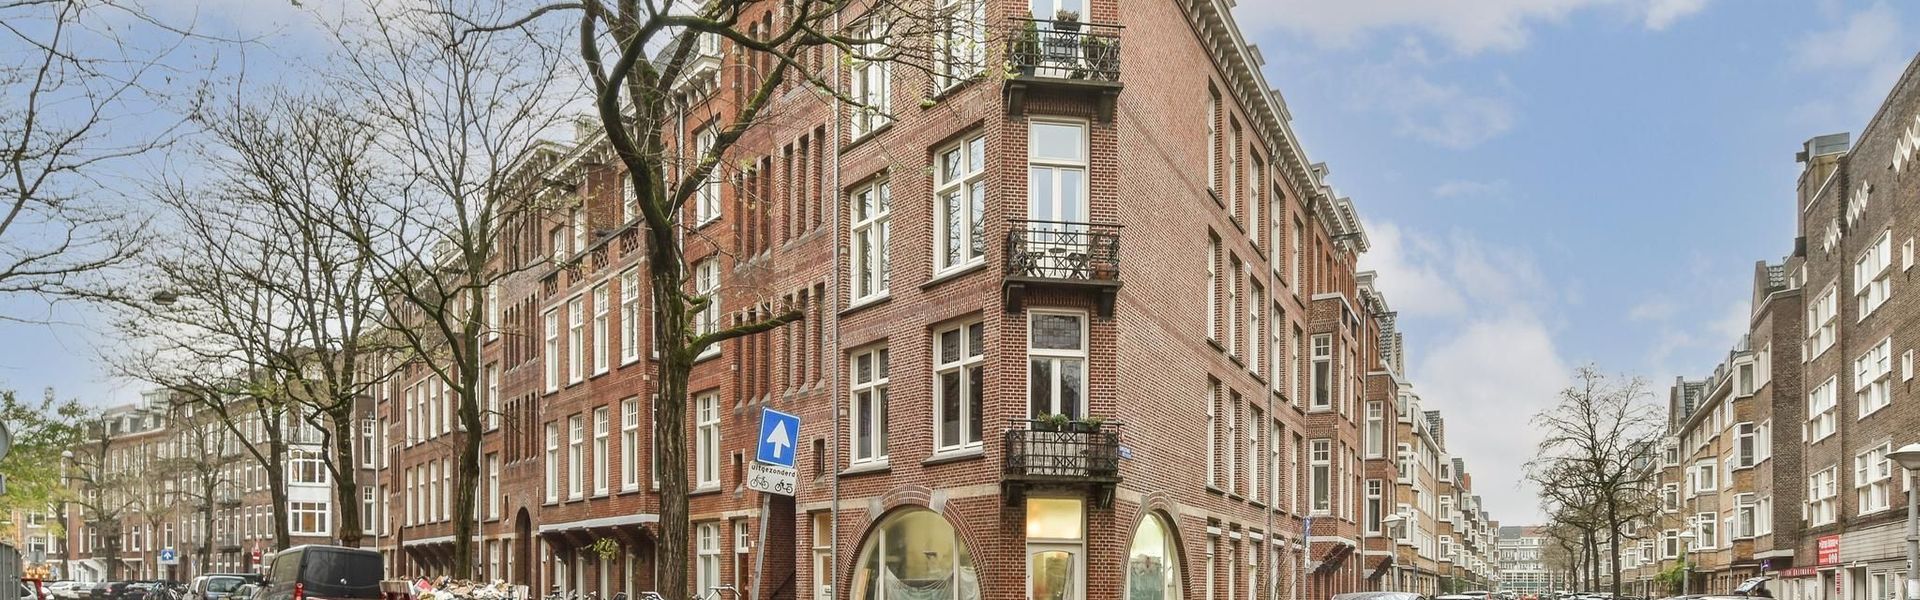 Maarten Harpertszoon Trompstraat 24 IV, Amsterdam